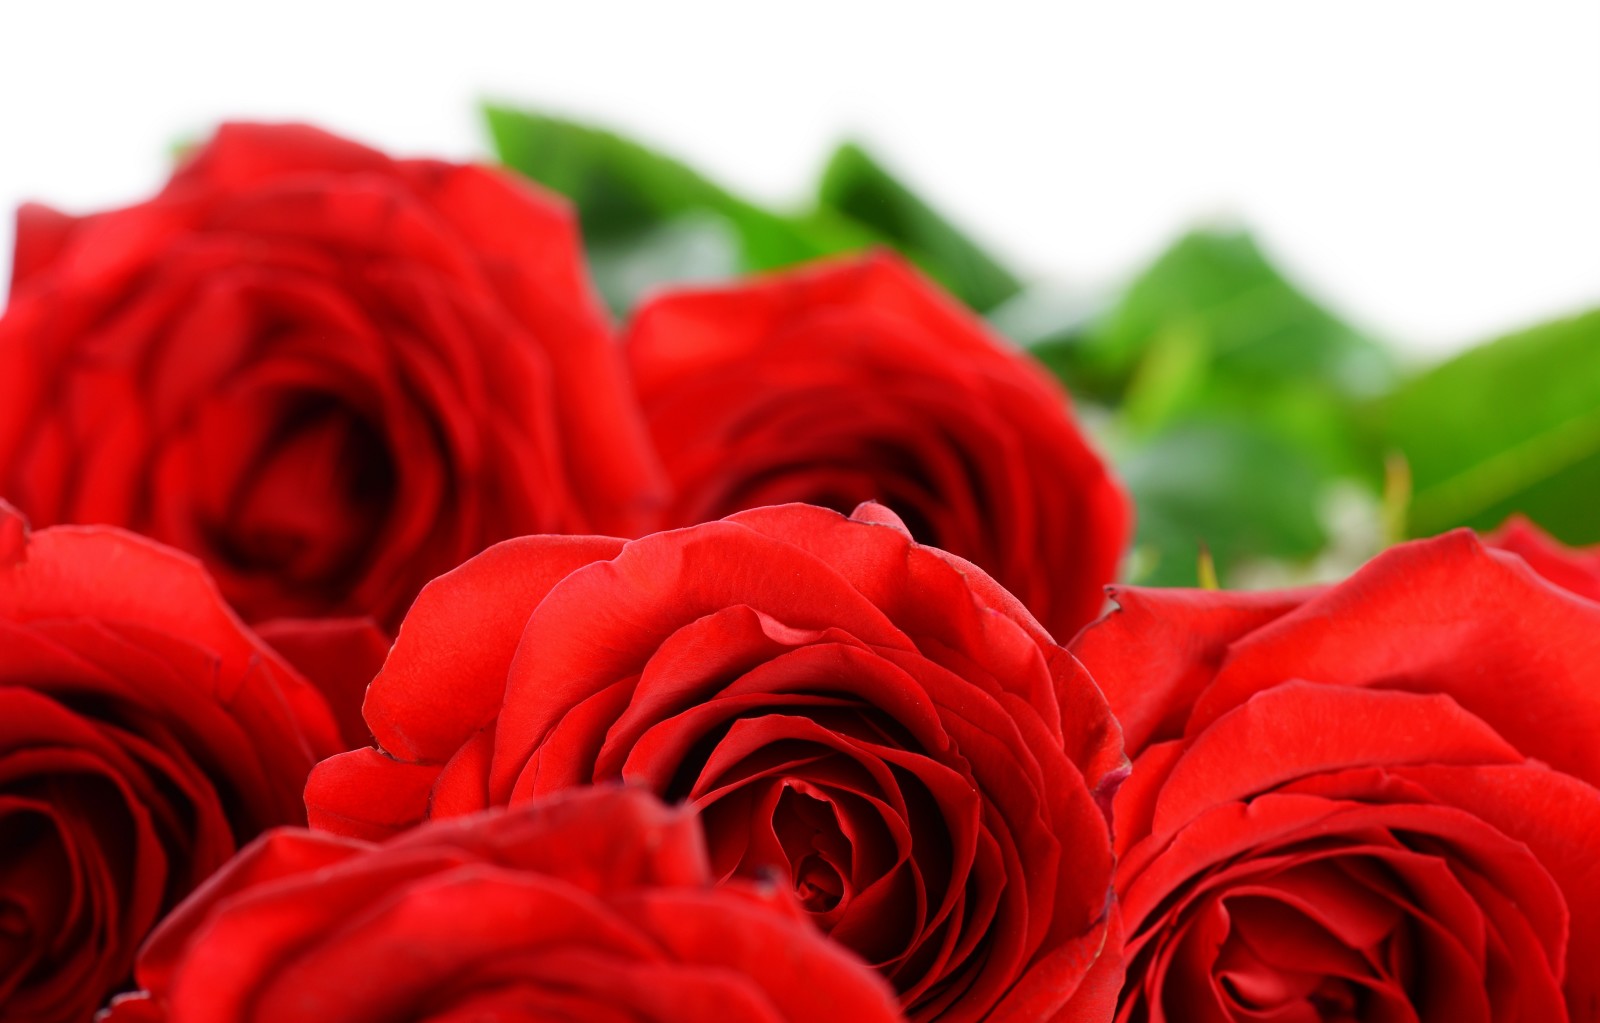 mawar, mawar mawar merah, bunga-bunga, kelopak